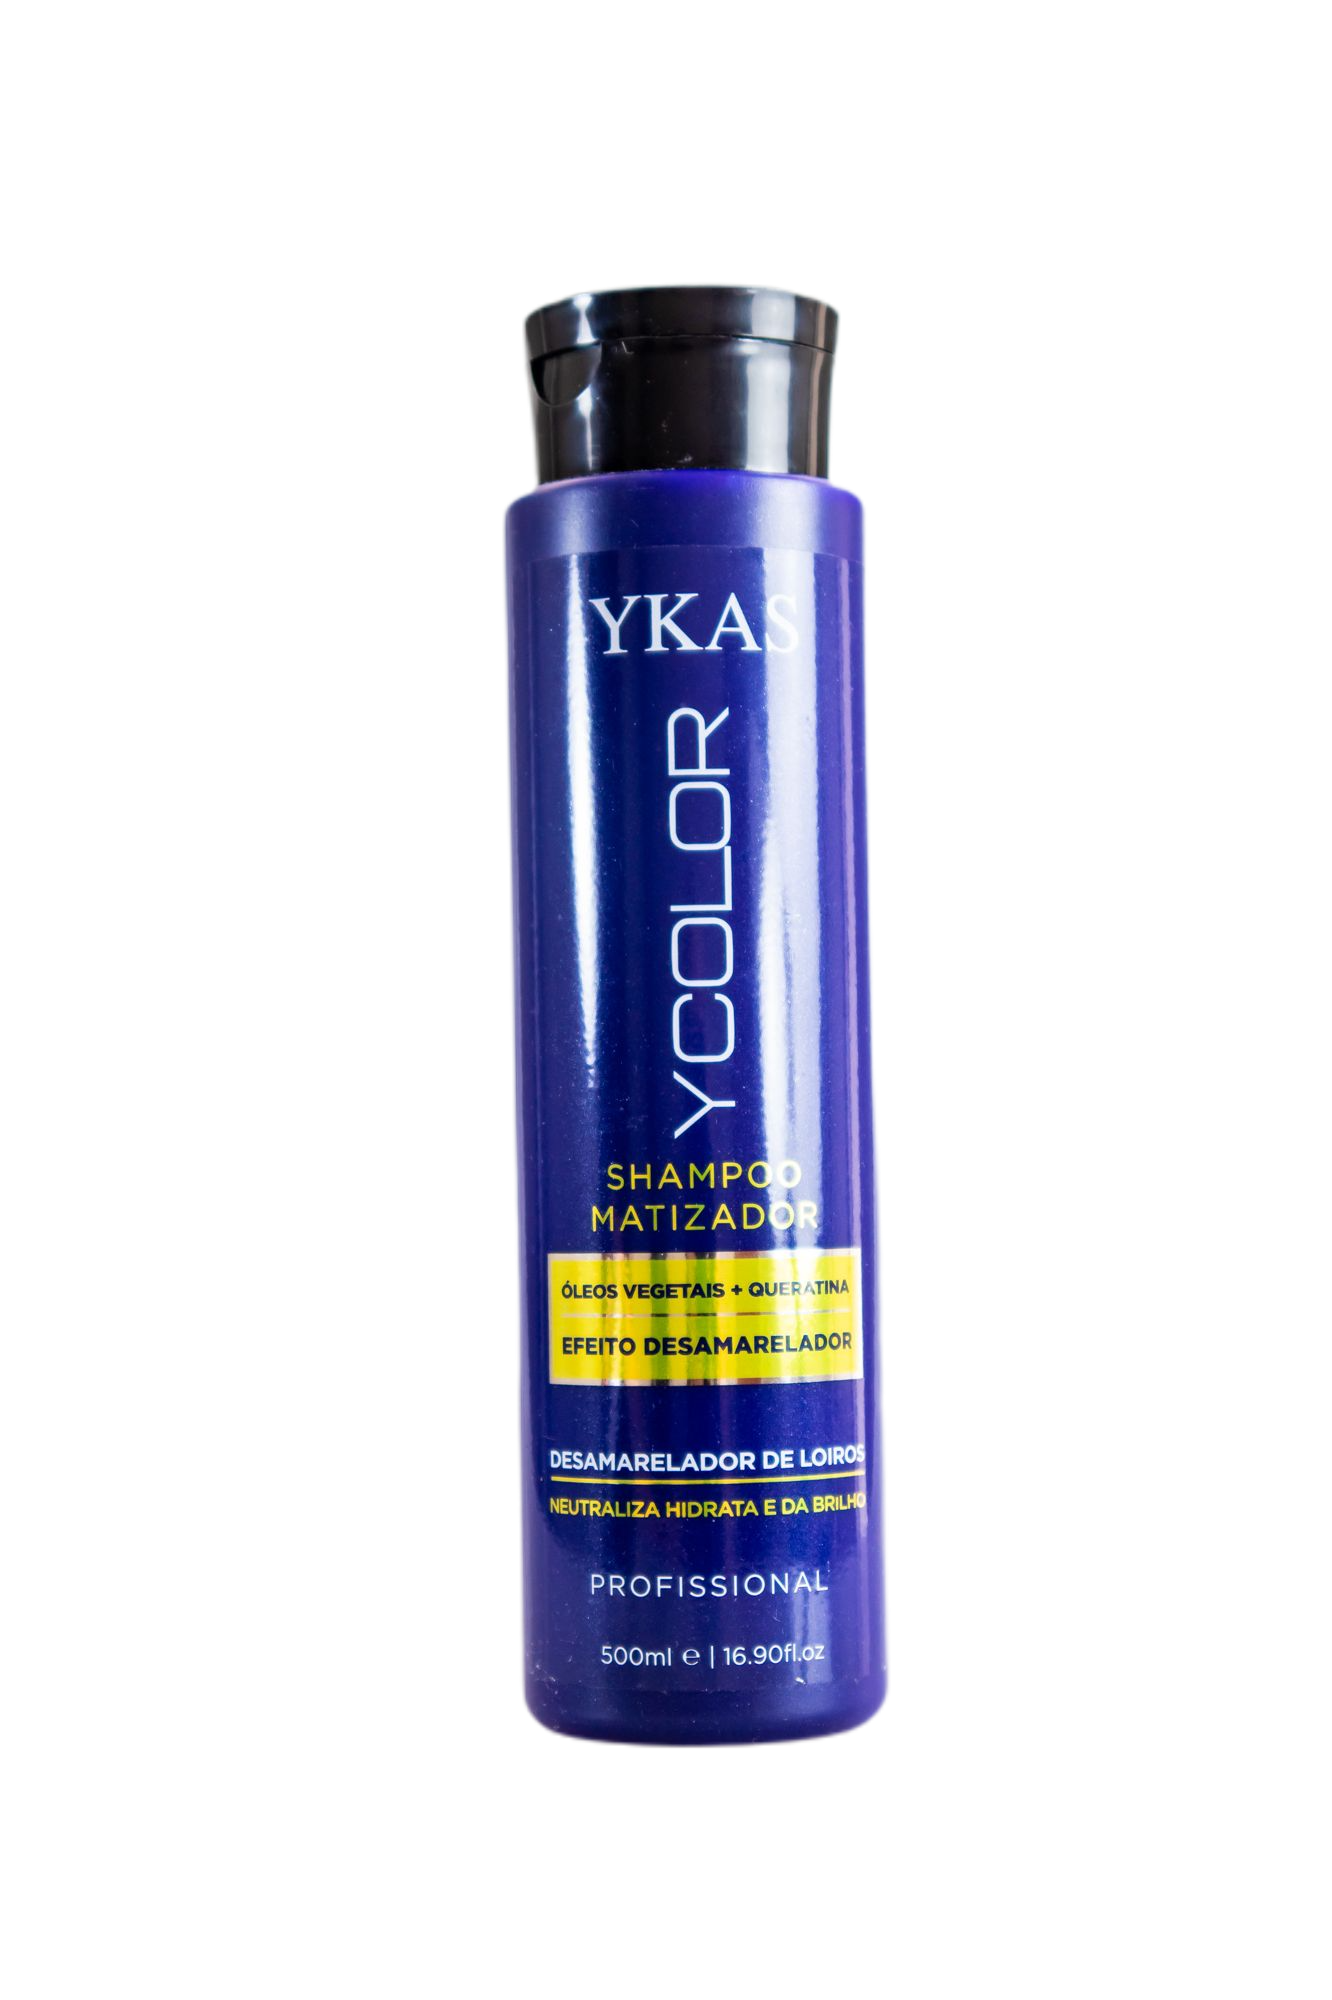 Ykas Home Care Ycolor Tinting Shampoo Keratin Vegetable Oil Anti Yellow Treatment 500ml - Ykas